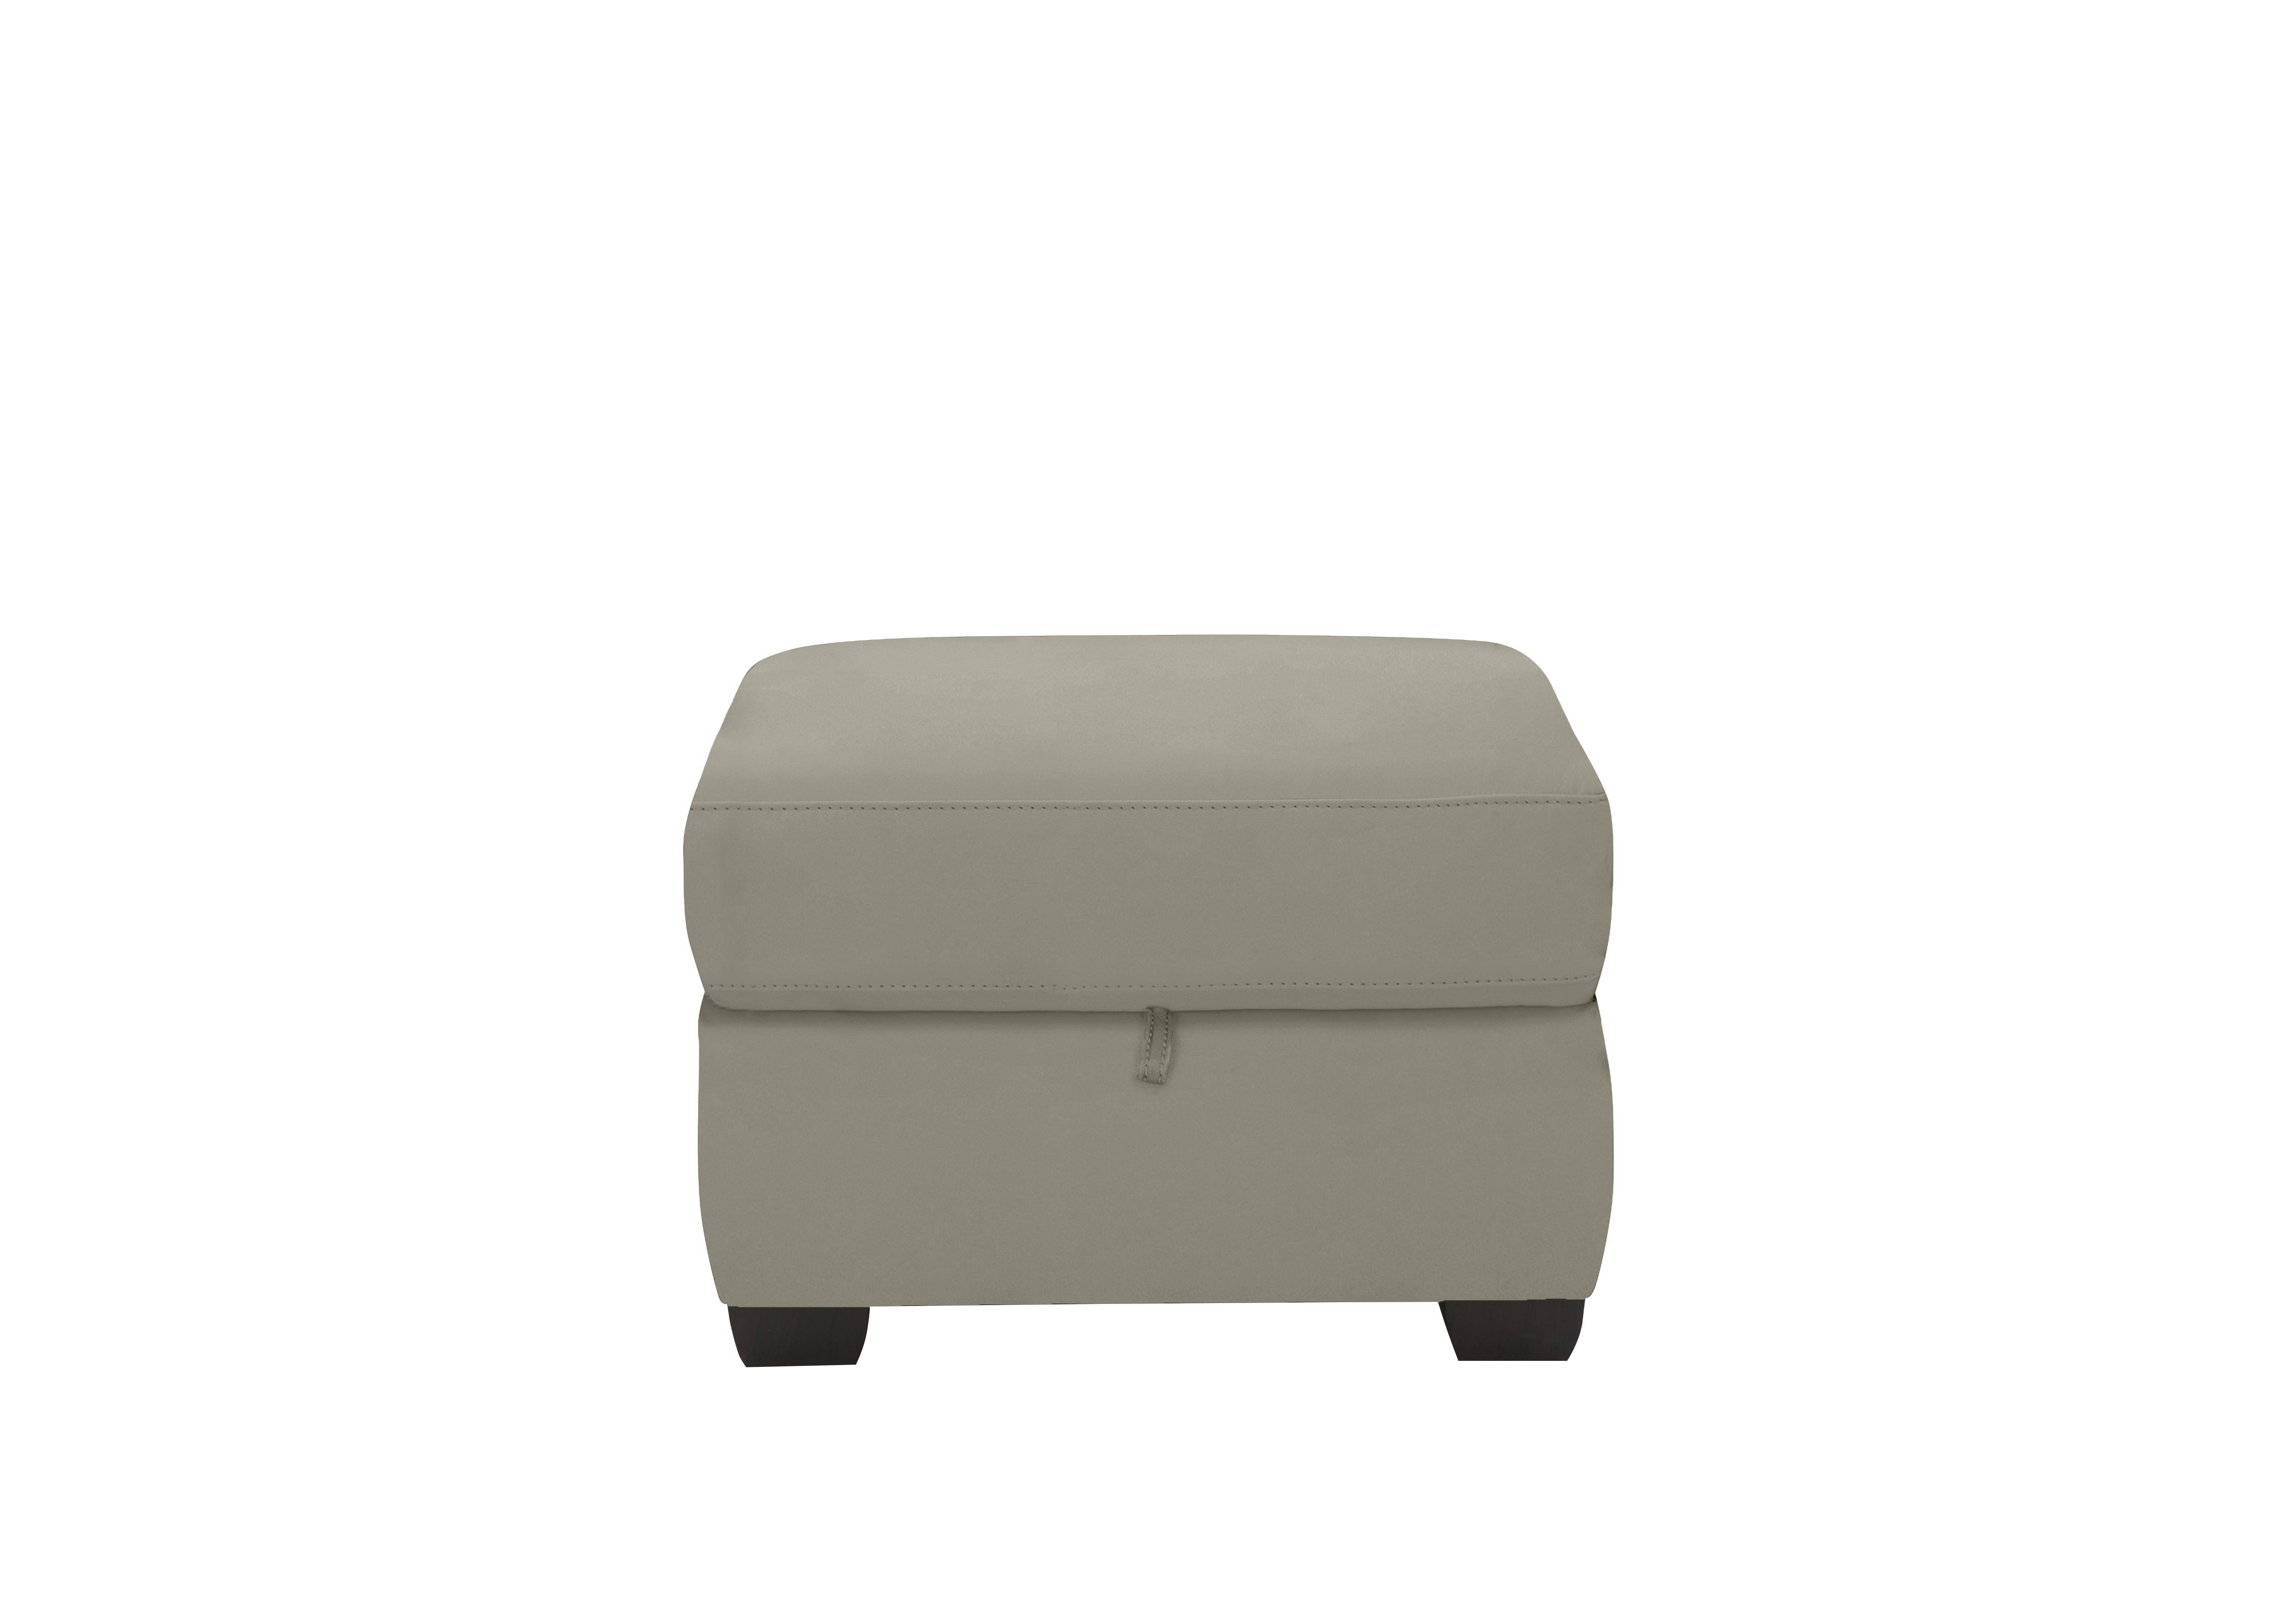 Optimus Leather Storage Footstool in Bv-946b Silver Grey on Furniture Village